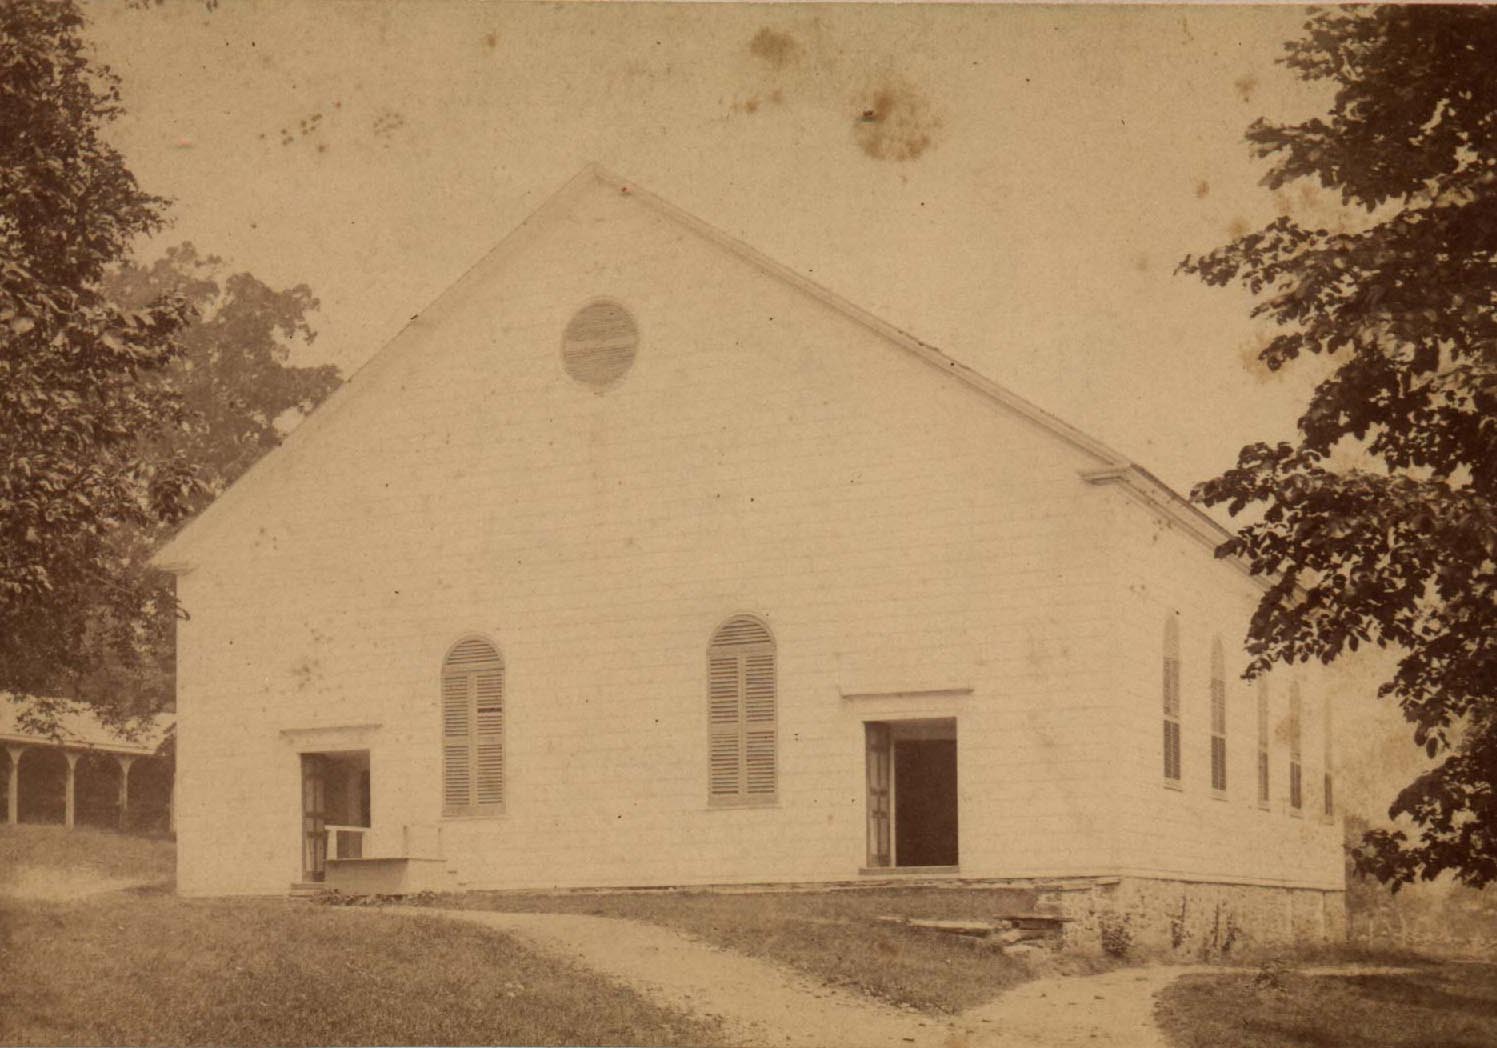 BG 1800s or early church - Church bldg - exterior (3).jpg